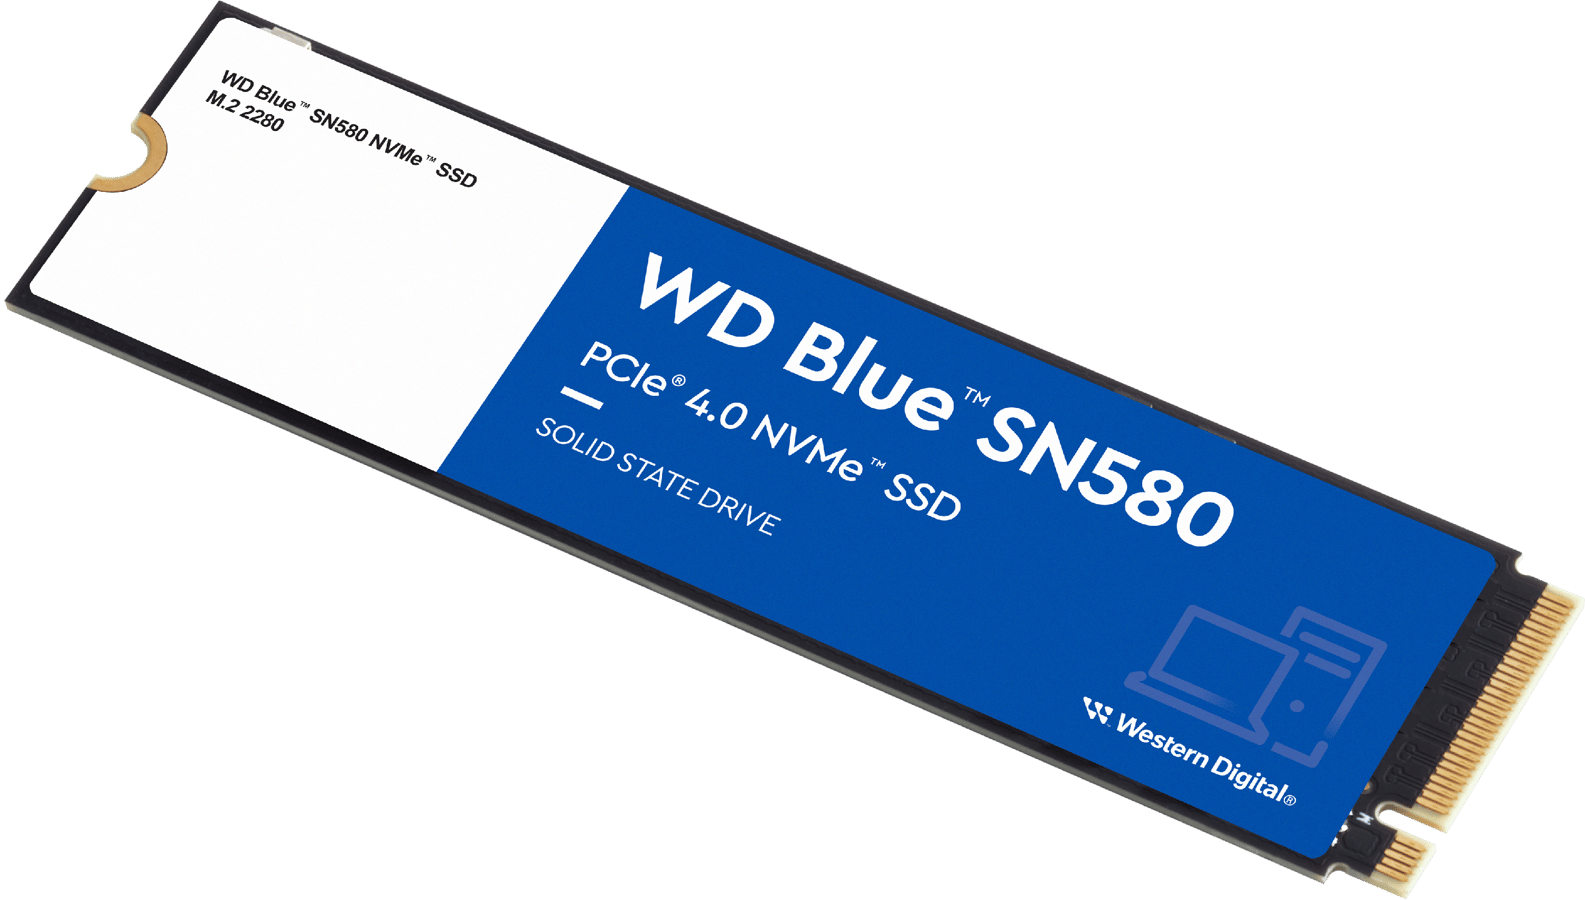 Retailers Begin Listing 4 TB WD Blue SSD